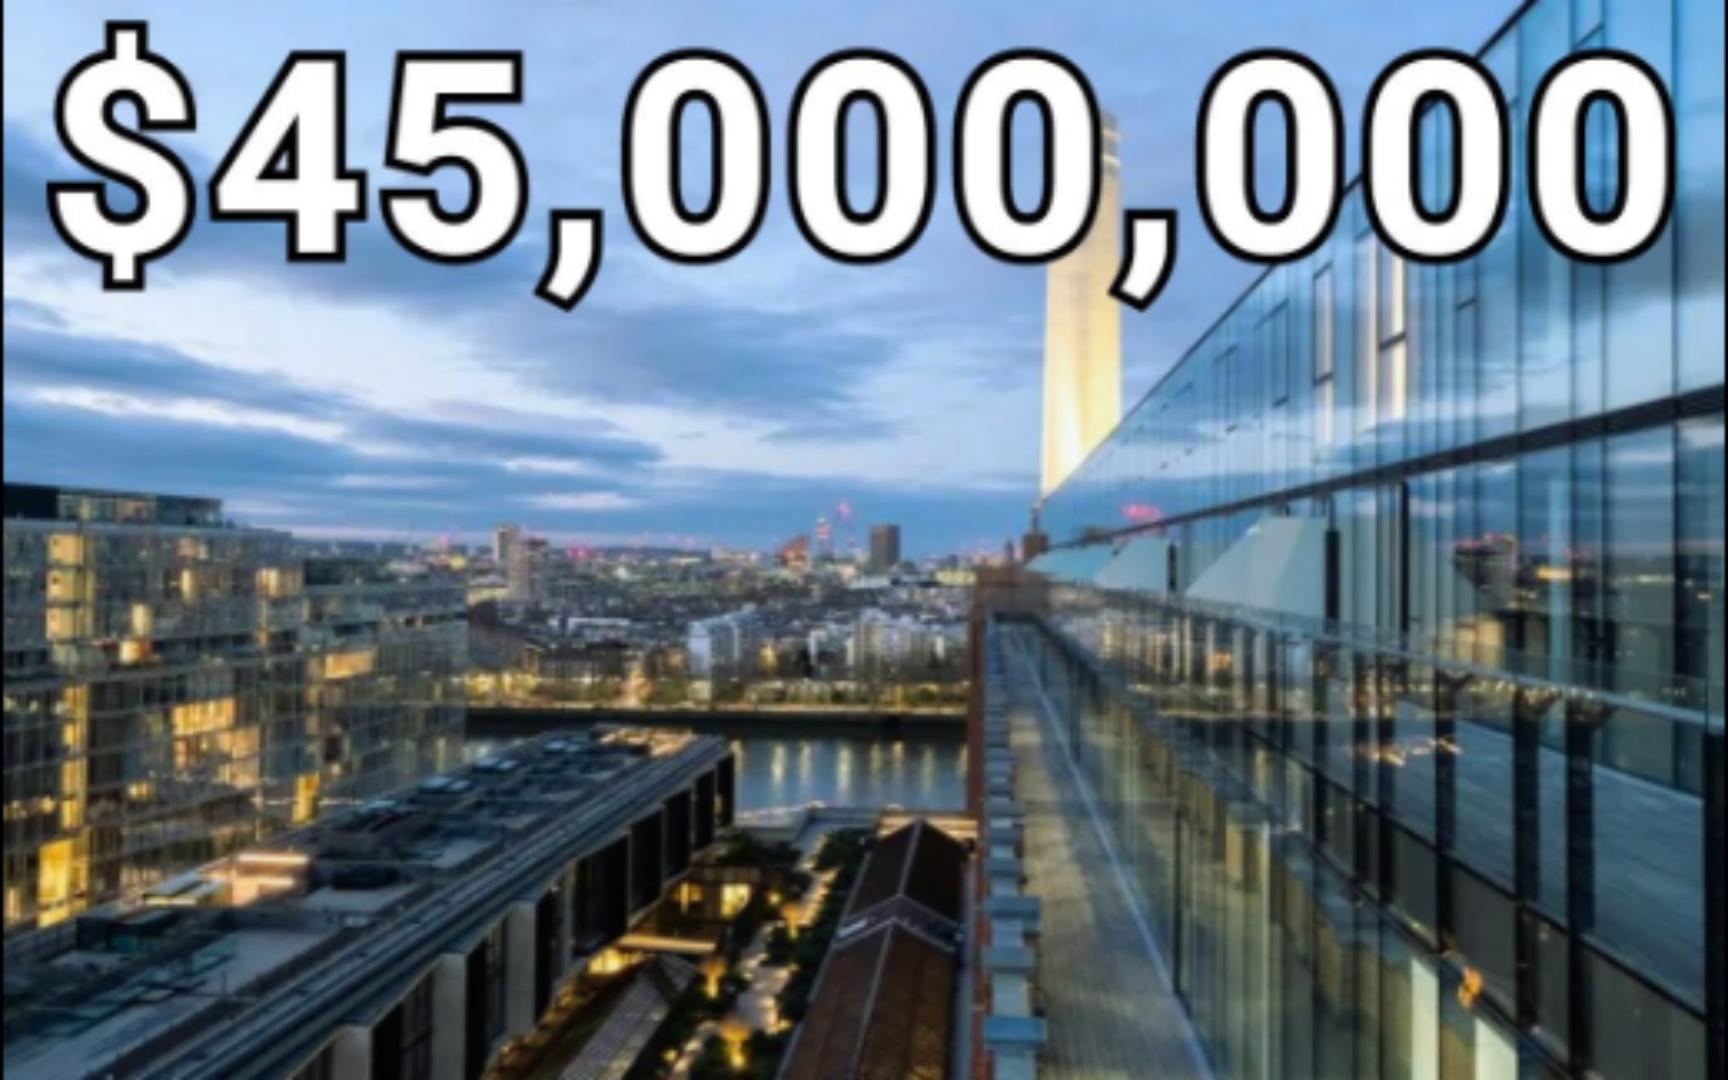 【Luxe List】参观伦敦市中心价值4500万美元的豪华顶层公寓